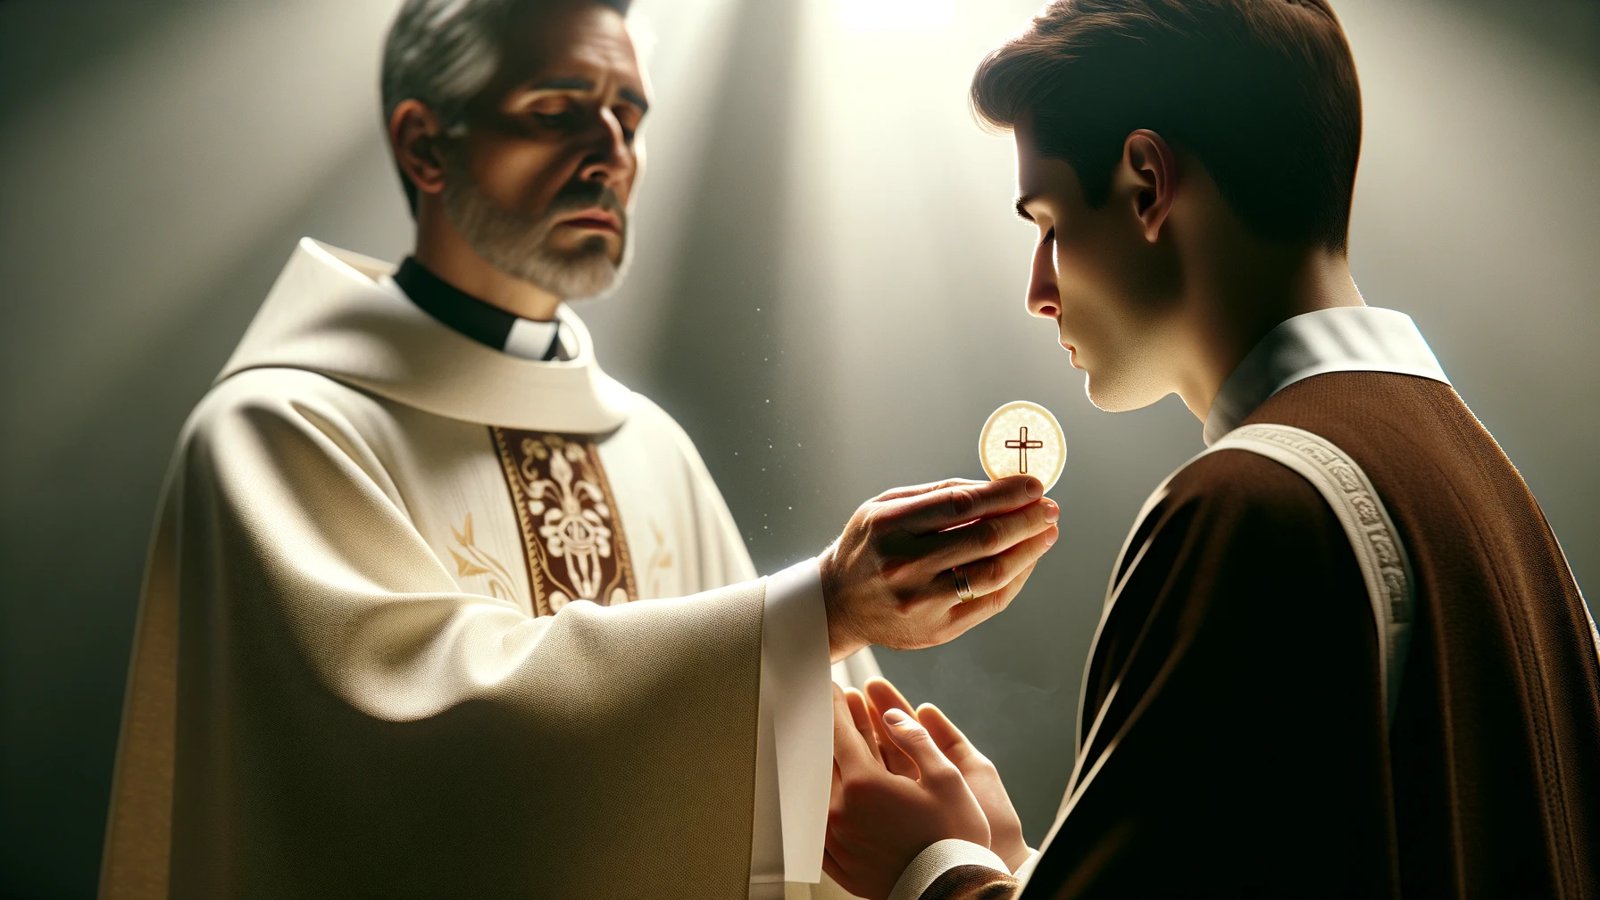 Should You Kneel When Receiving Communion